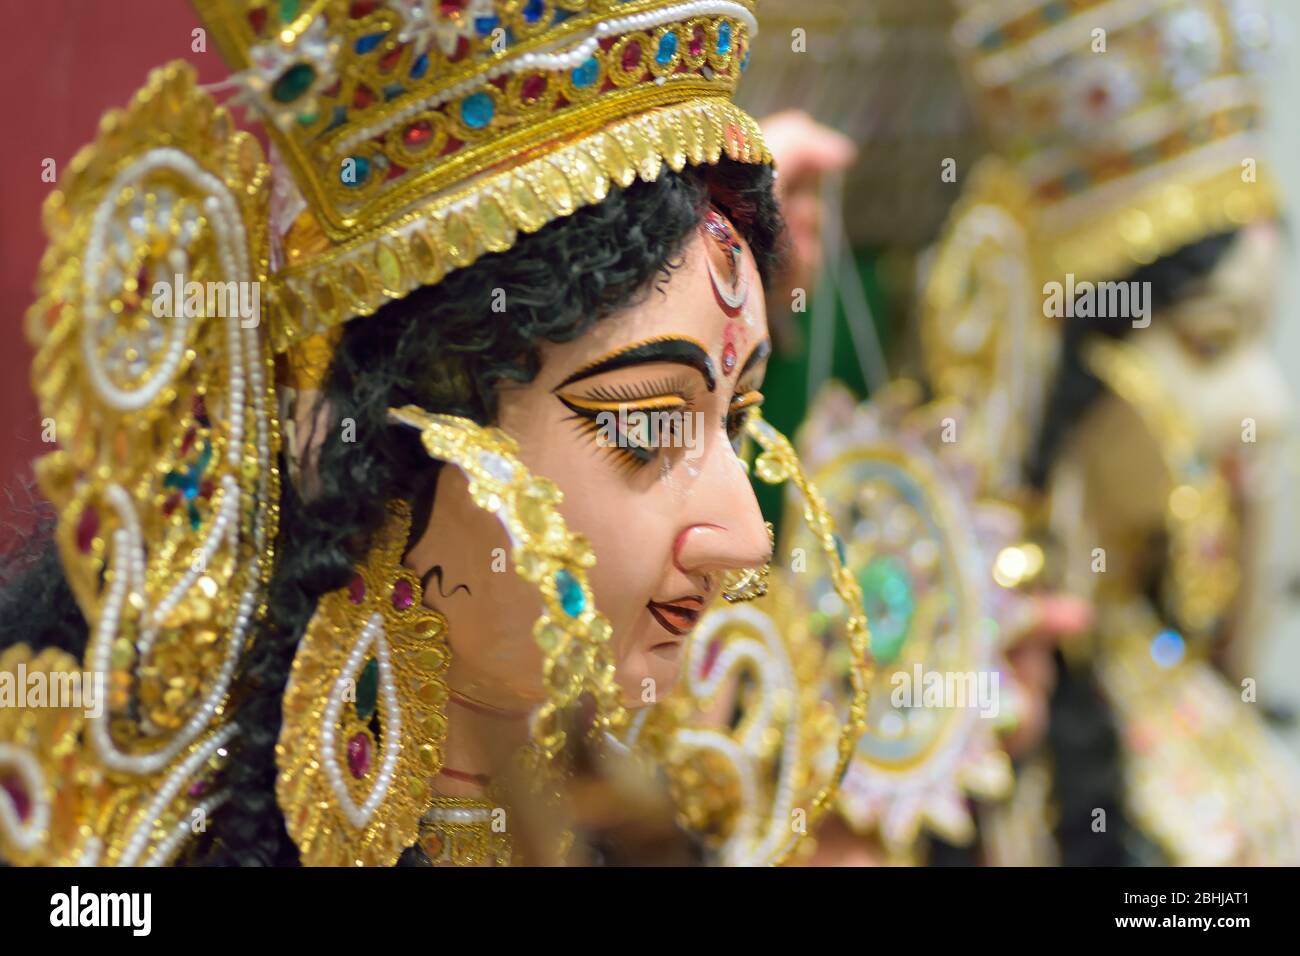 Idol of Hindu Goddess Durga during Durga Puja festival in India Stock Photo  - Alamy